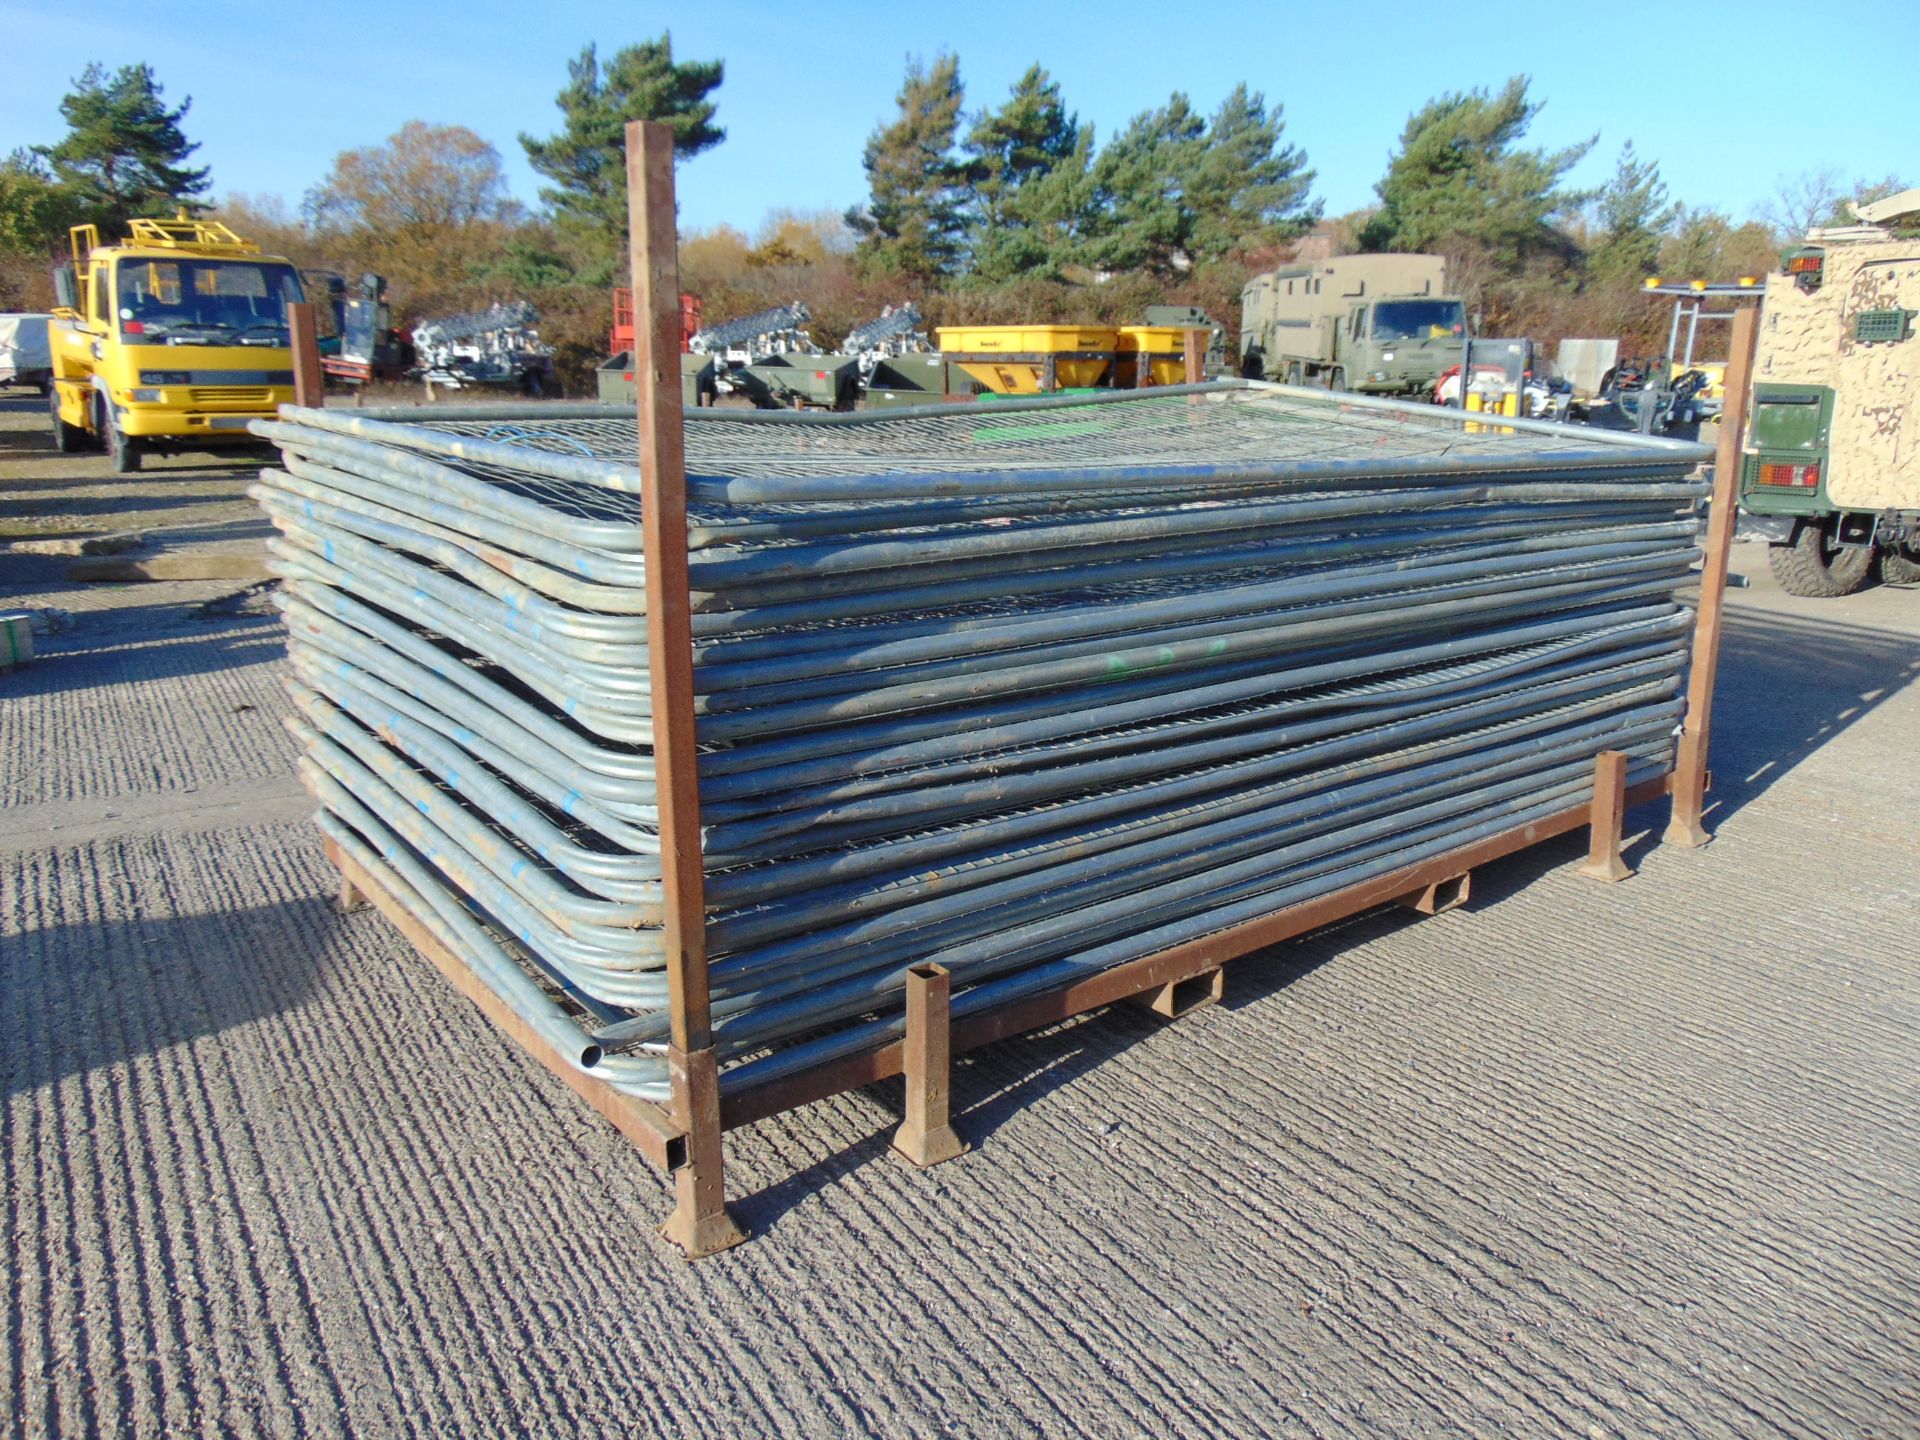 27 x Heras Style Galvanised Fencing Panels 3.4m x 2m C/W Transport Stillage